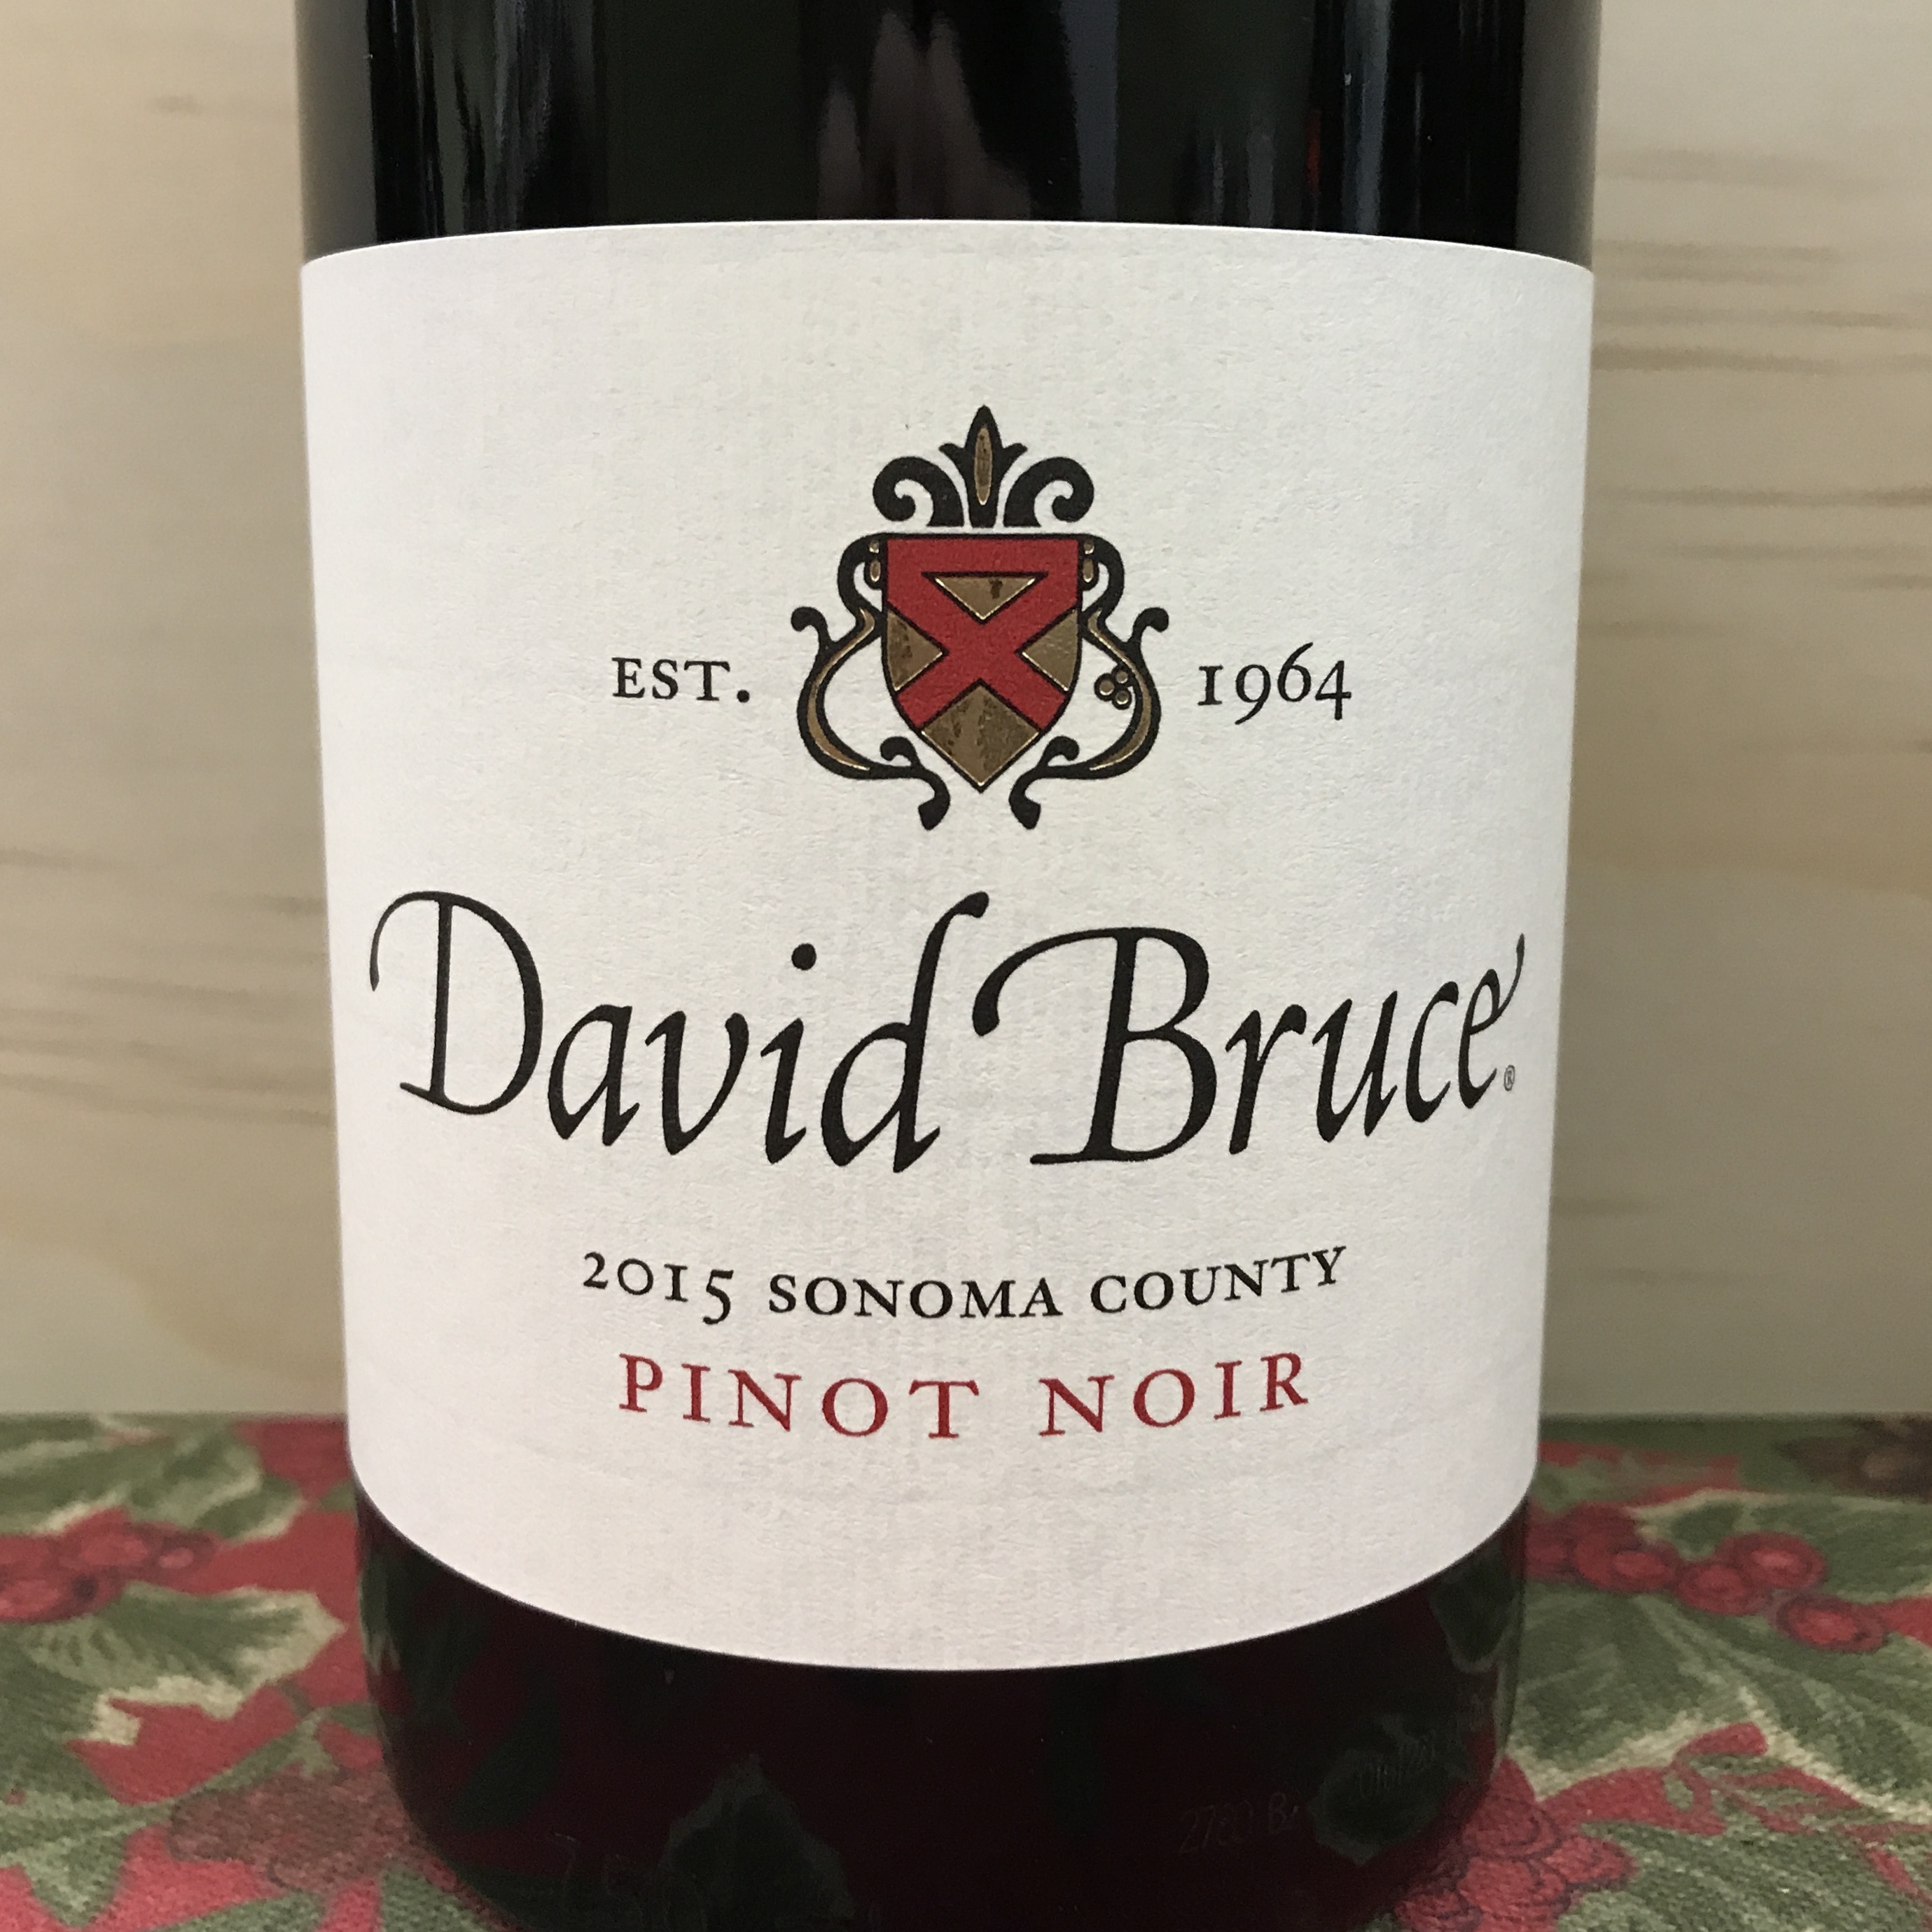 David Bruce Pinot Noir Sonoma County 2015